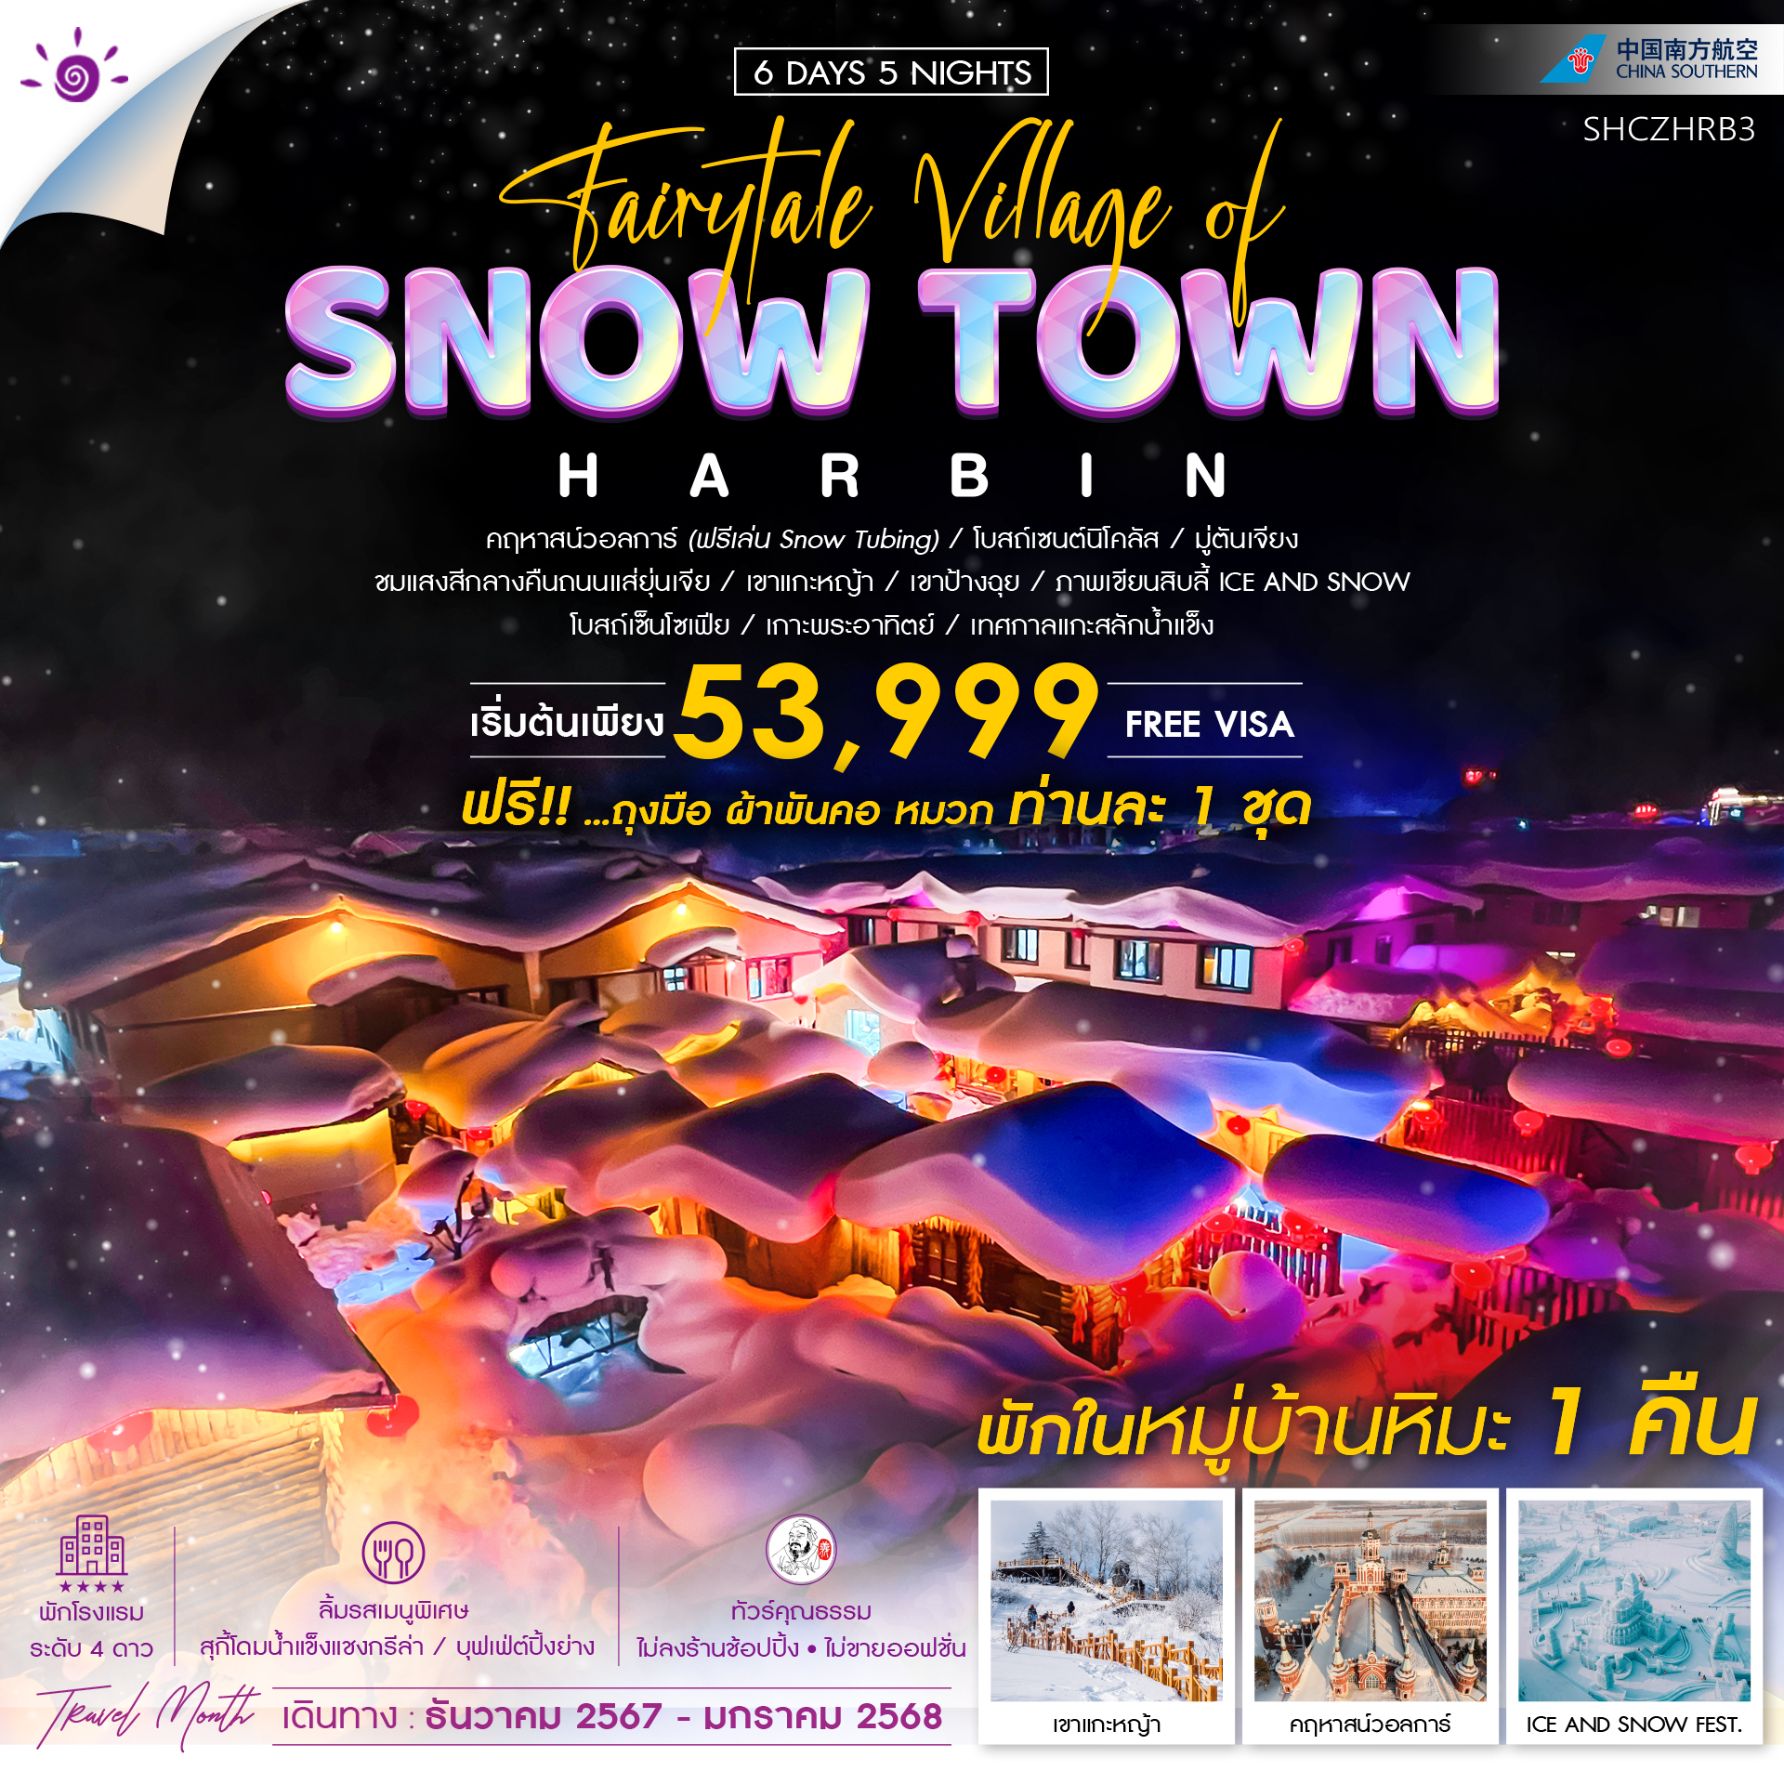 SNOW TOWN HARBIN ฮาร์บิน หมู่บ้านหิมะ 6 วัน 5 คืน เดินทาง ธันวาคม 67 - มกราคม 68 เริ่มต้น 53,999.- China Southern Airlines (CZ)